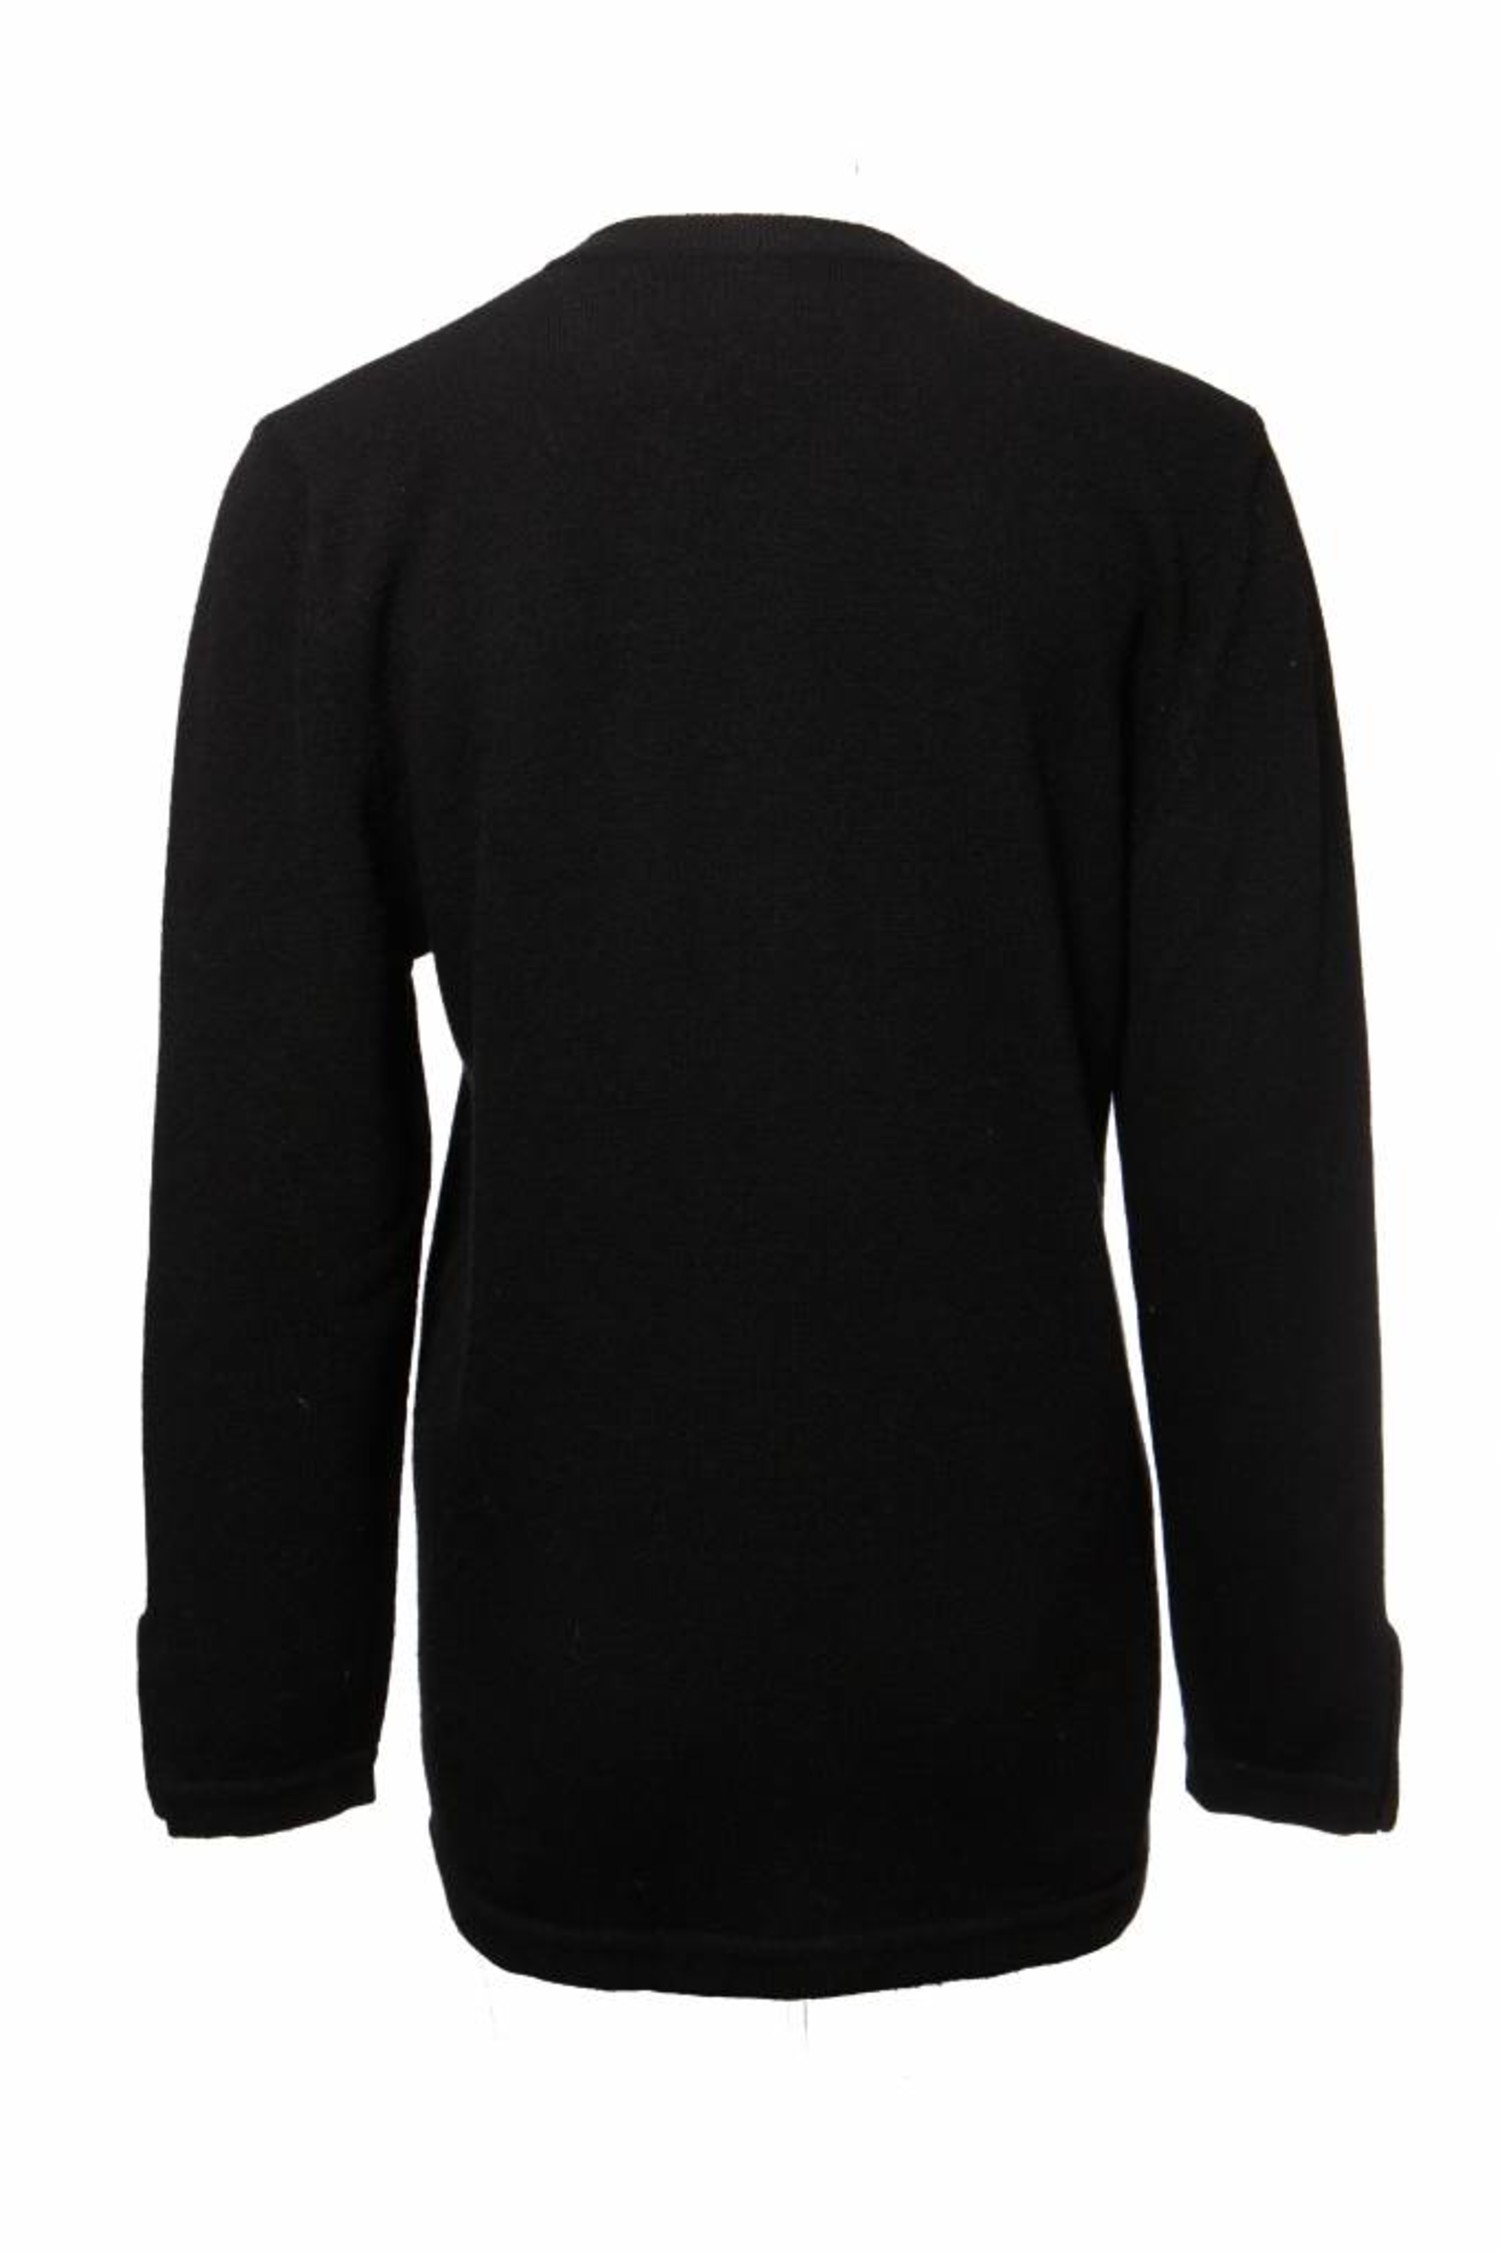 Chanel, black cashmere cardigan in size FR38/S. - Unique Designer